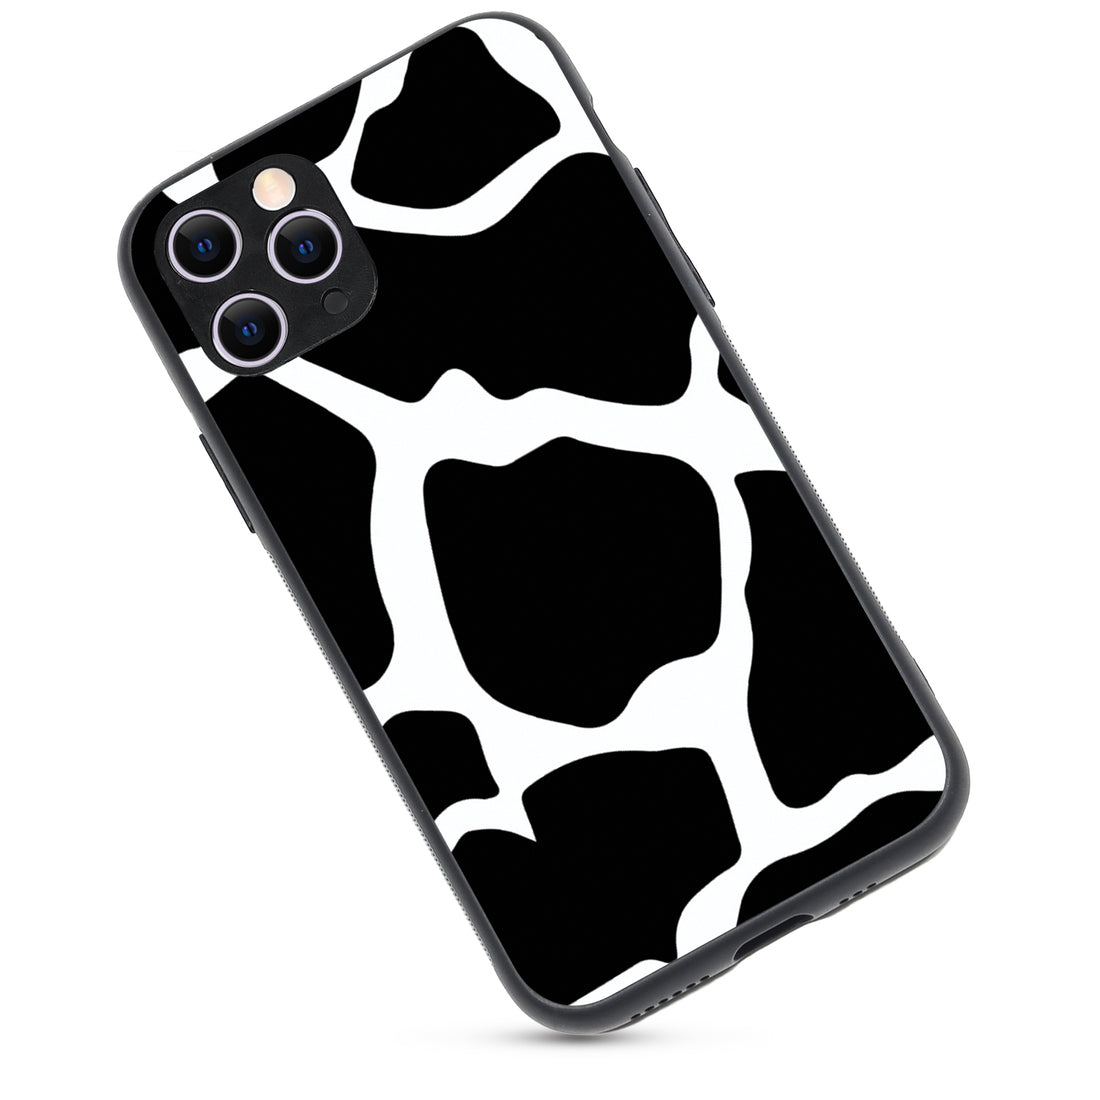 Black &amp; White Patch Design iPhone 11 Pro Case